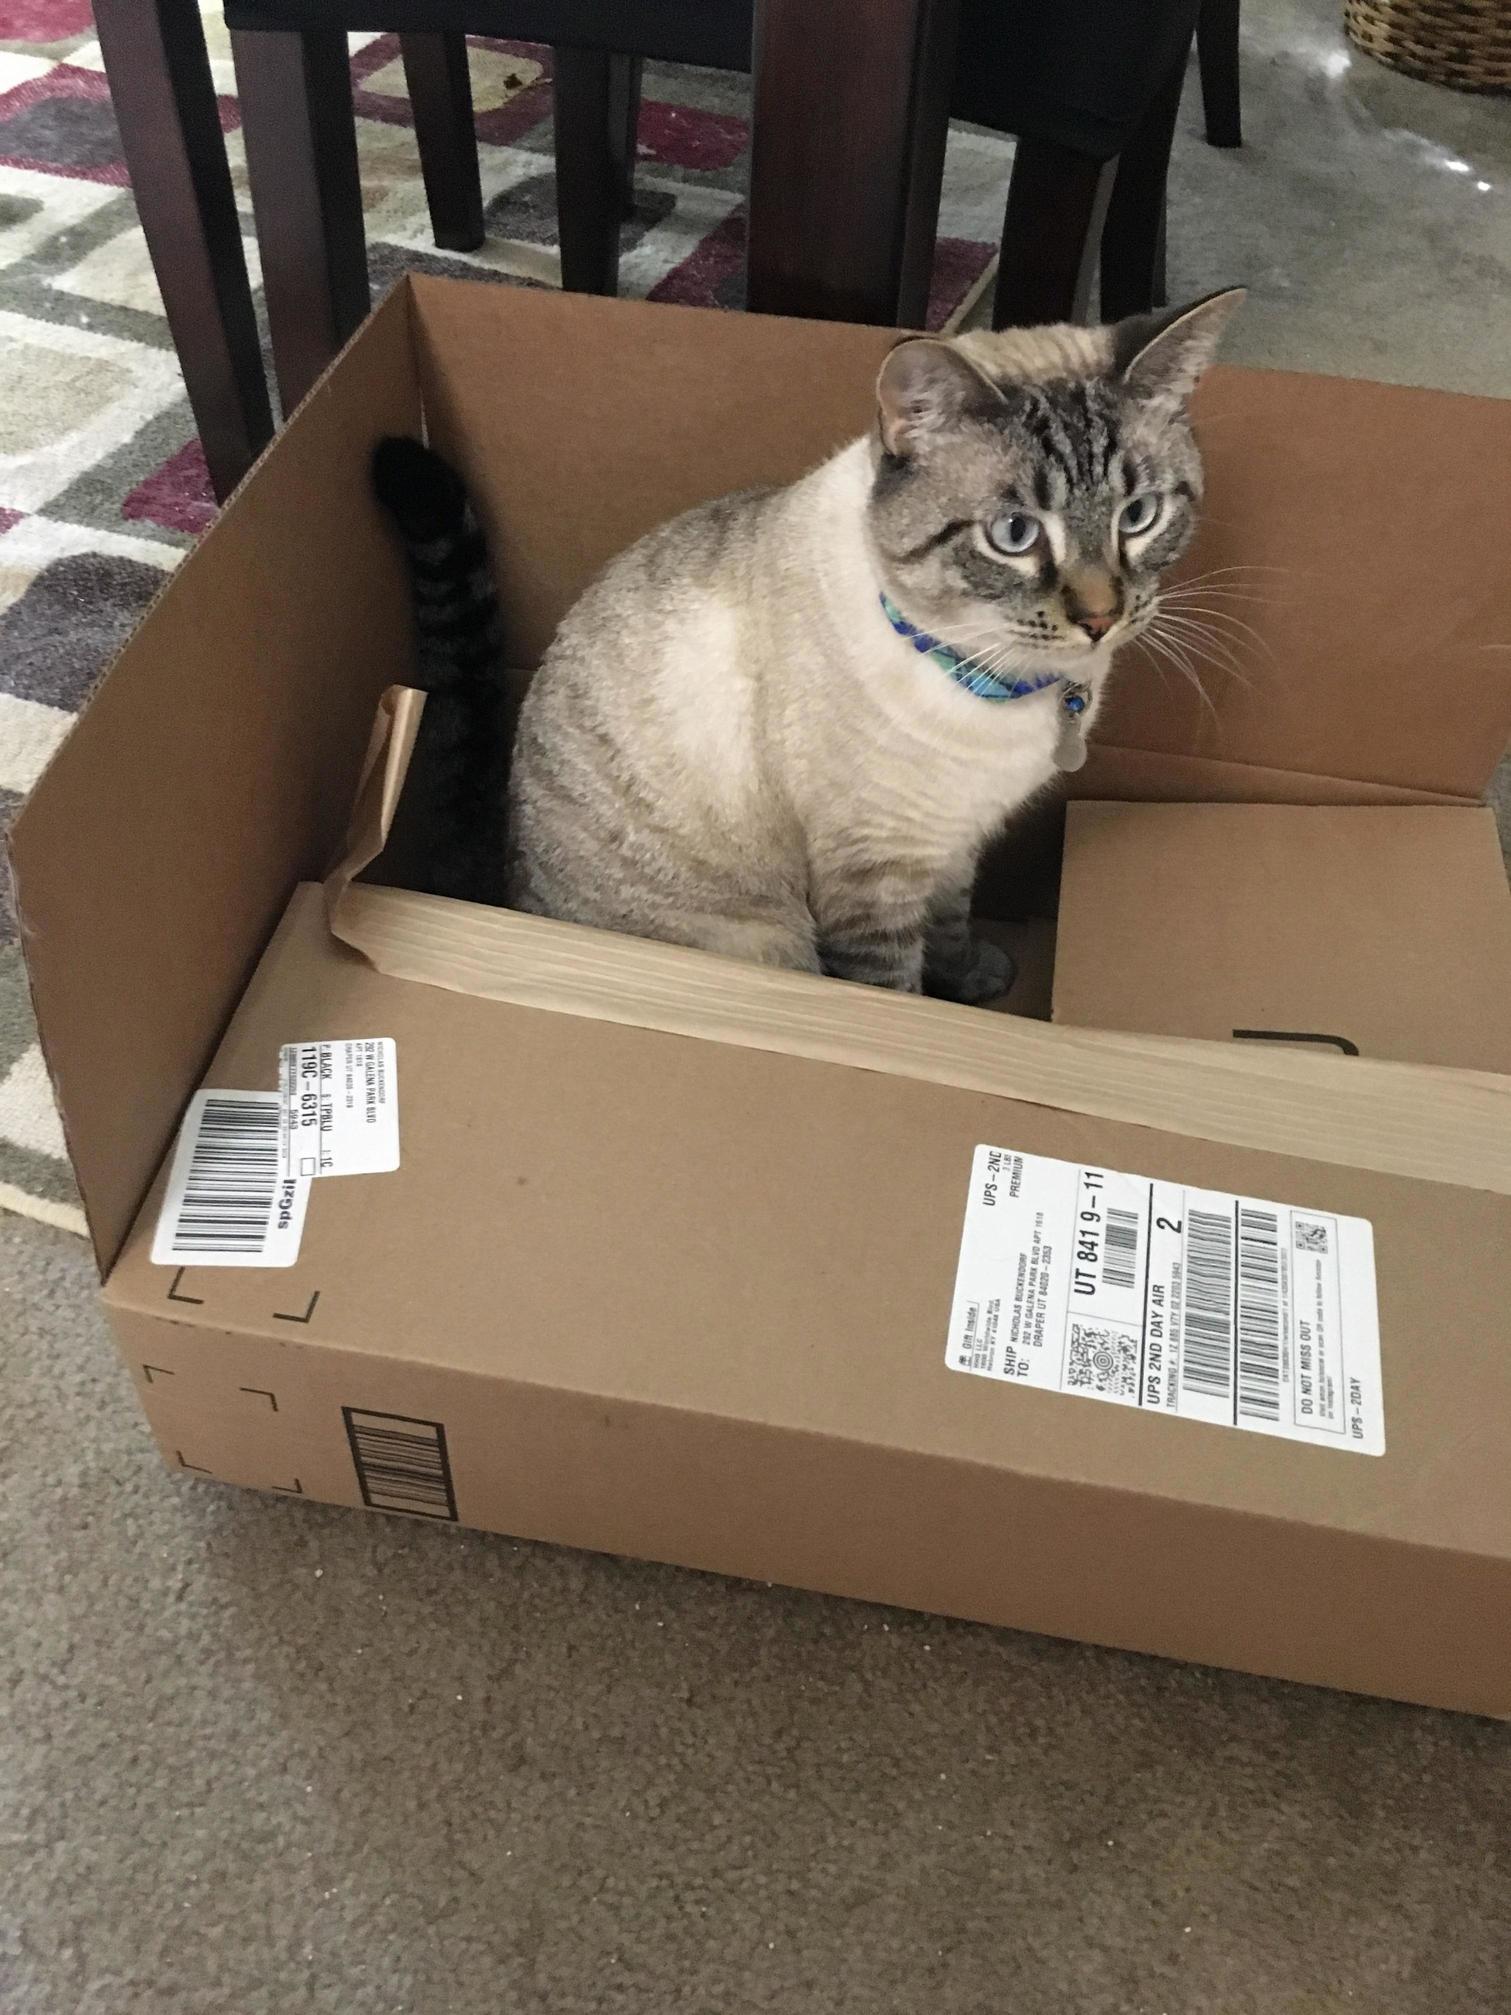 He found a box